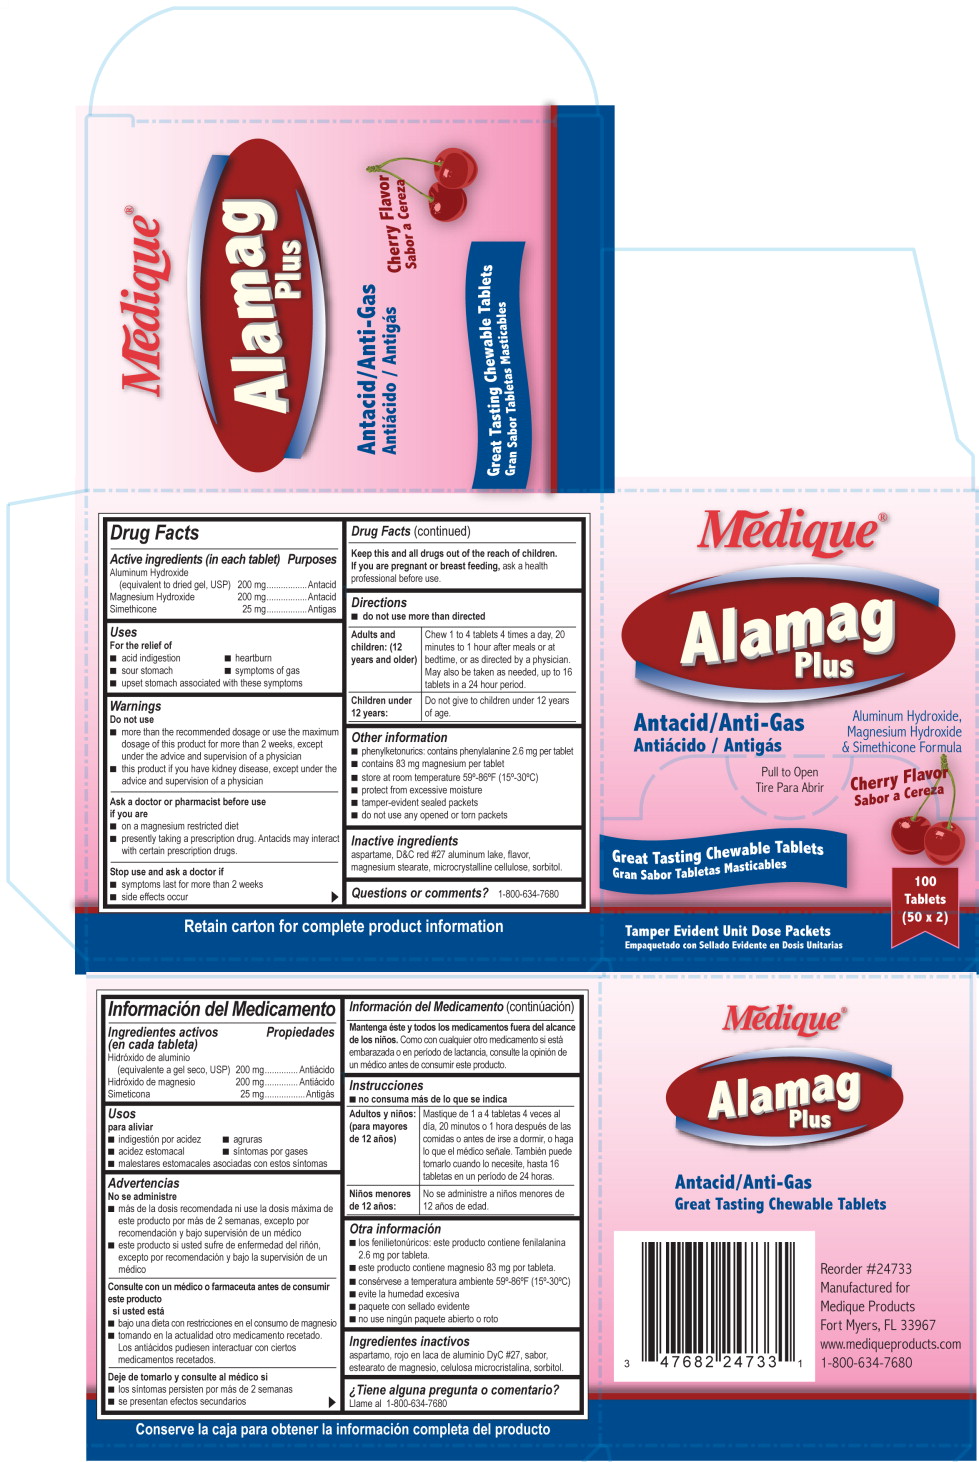 Principal Display Panel – 247R Medique Alamag Plus Label
